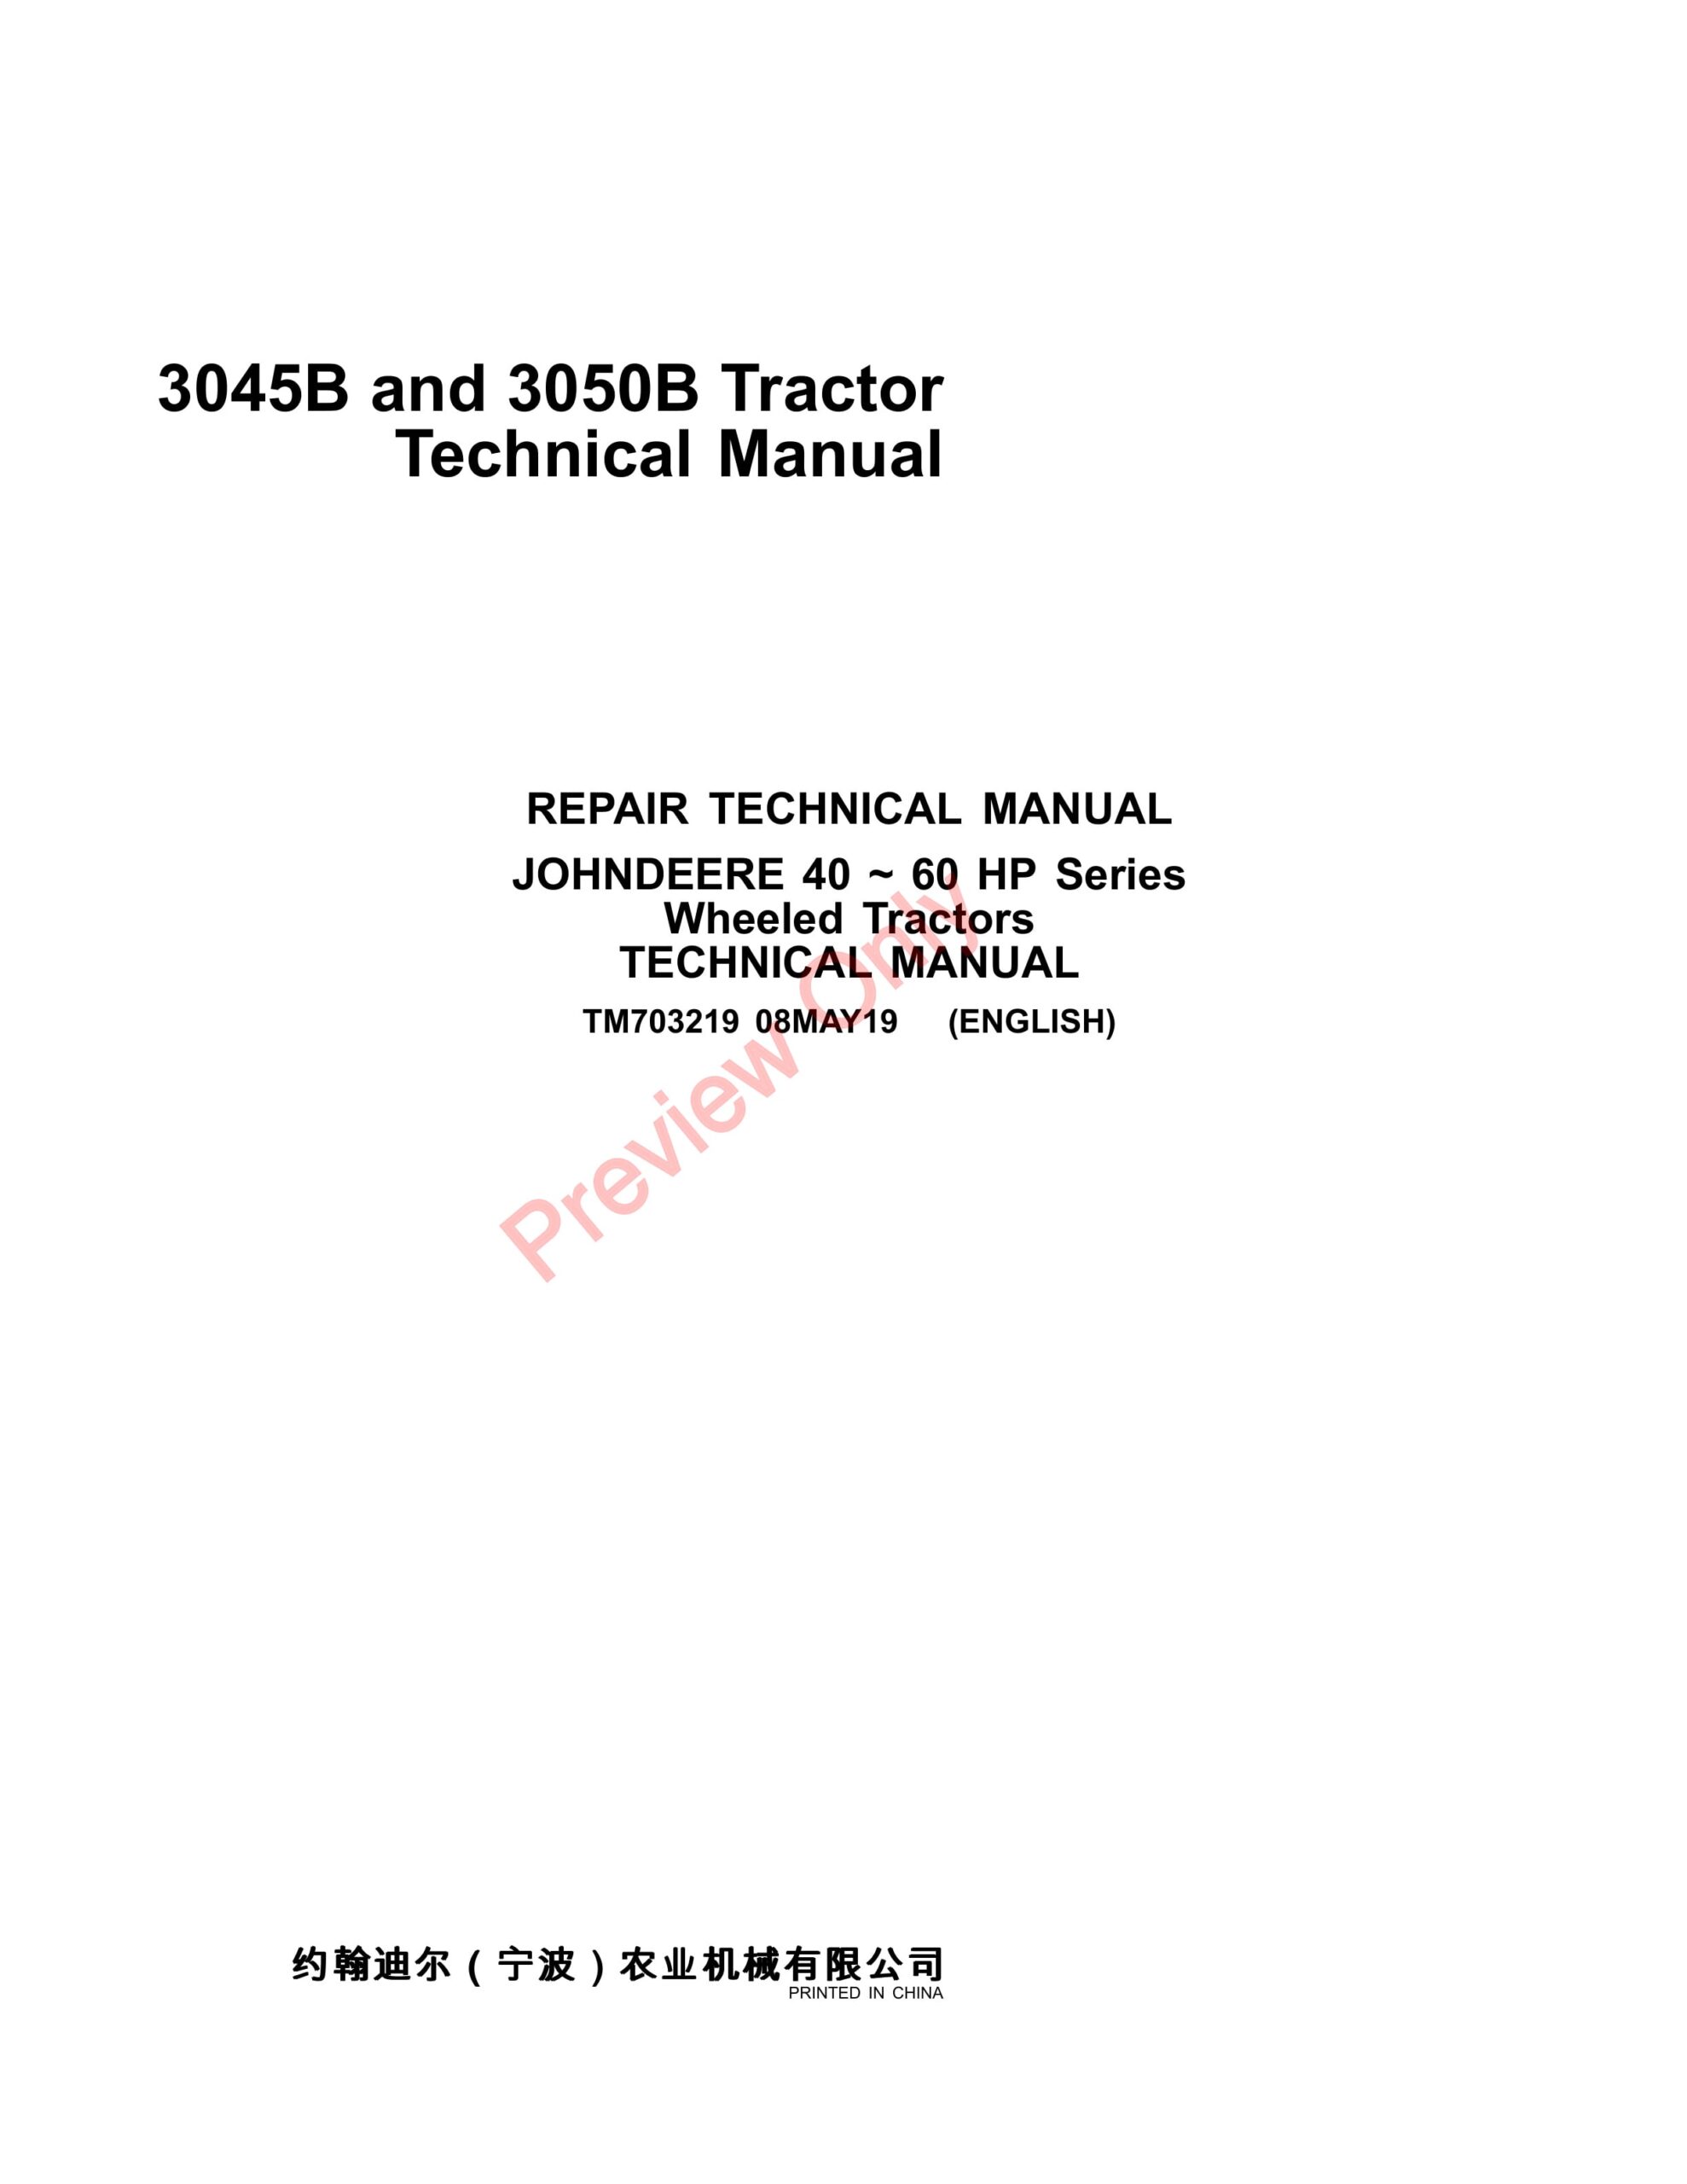 John Deere 3045B and 3050B Tractor Technical Manual TM703219 08MAY19-1